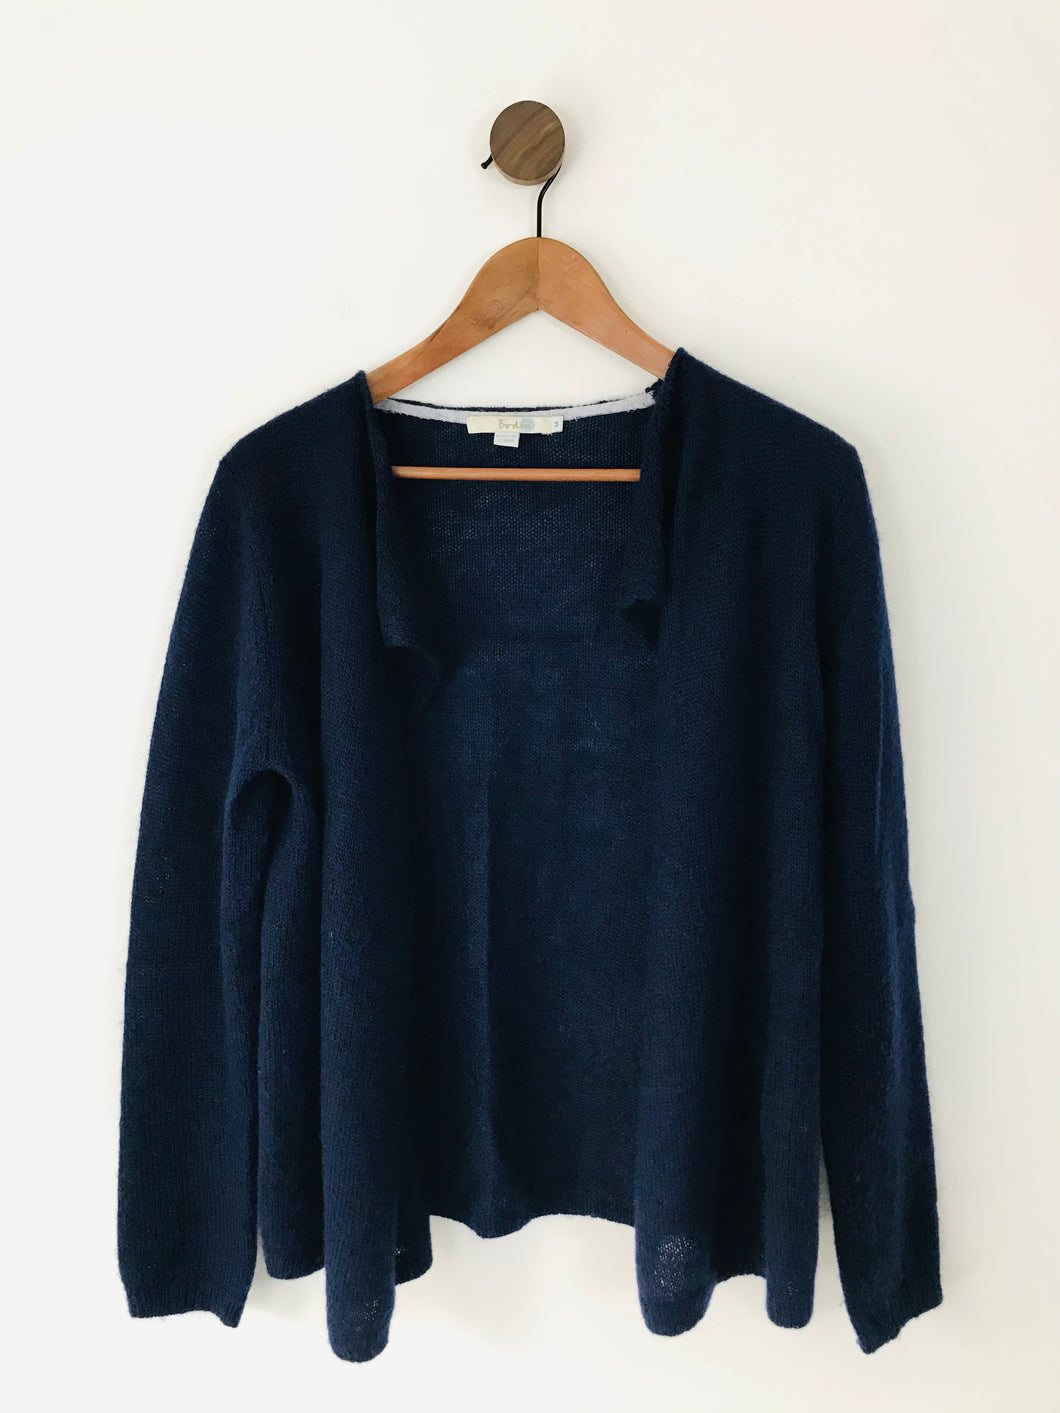 Boden Women’s Knit Cardigan | M UK10-12 | Navy Blue